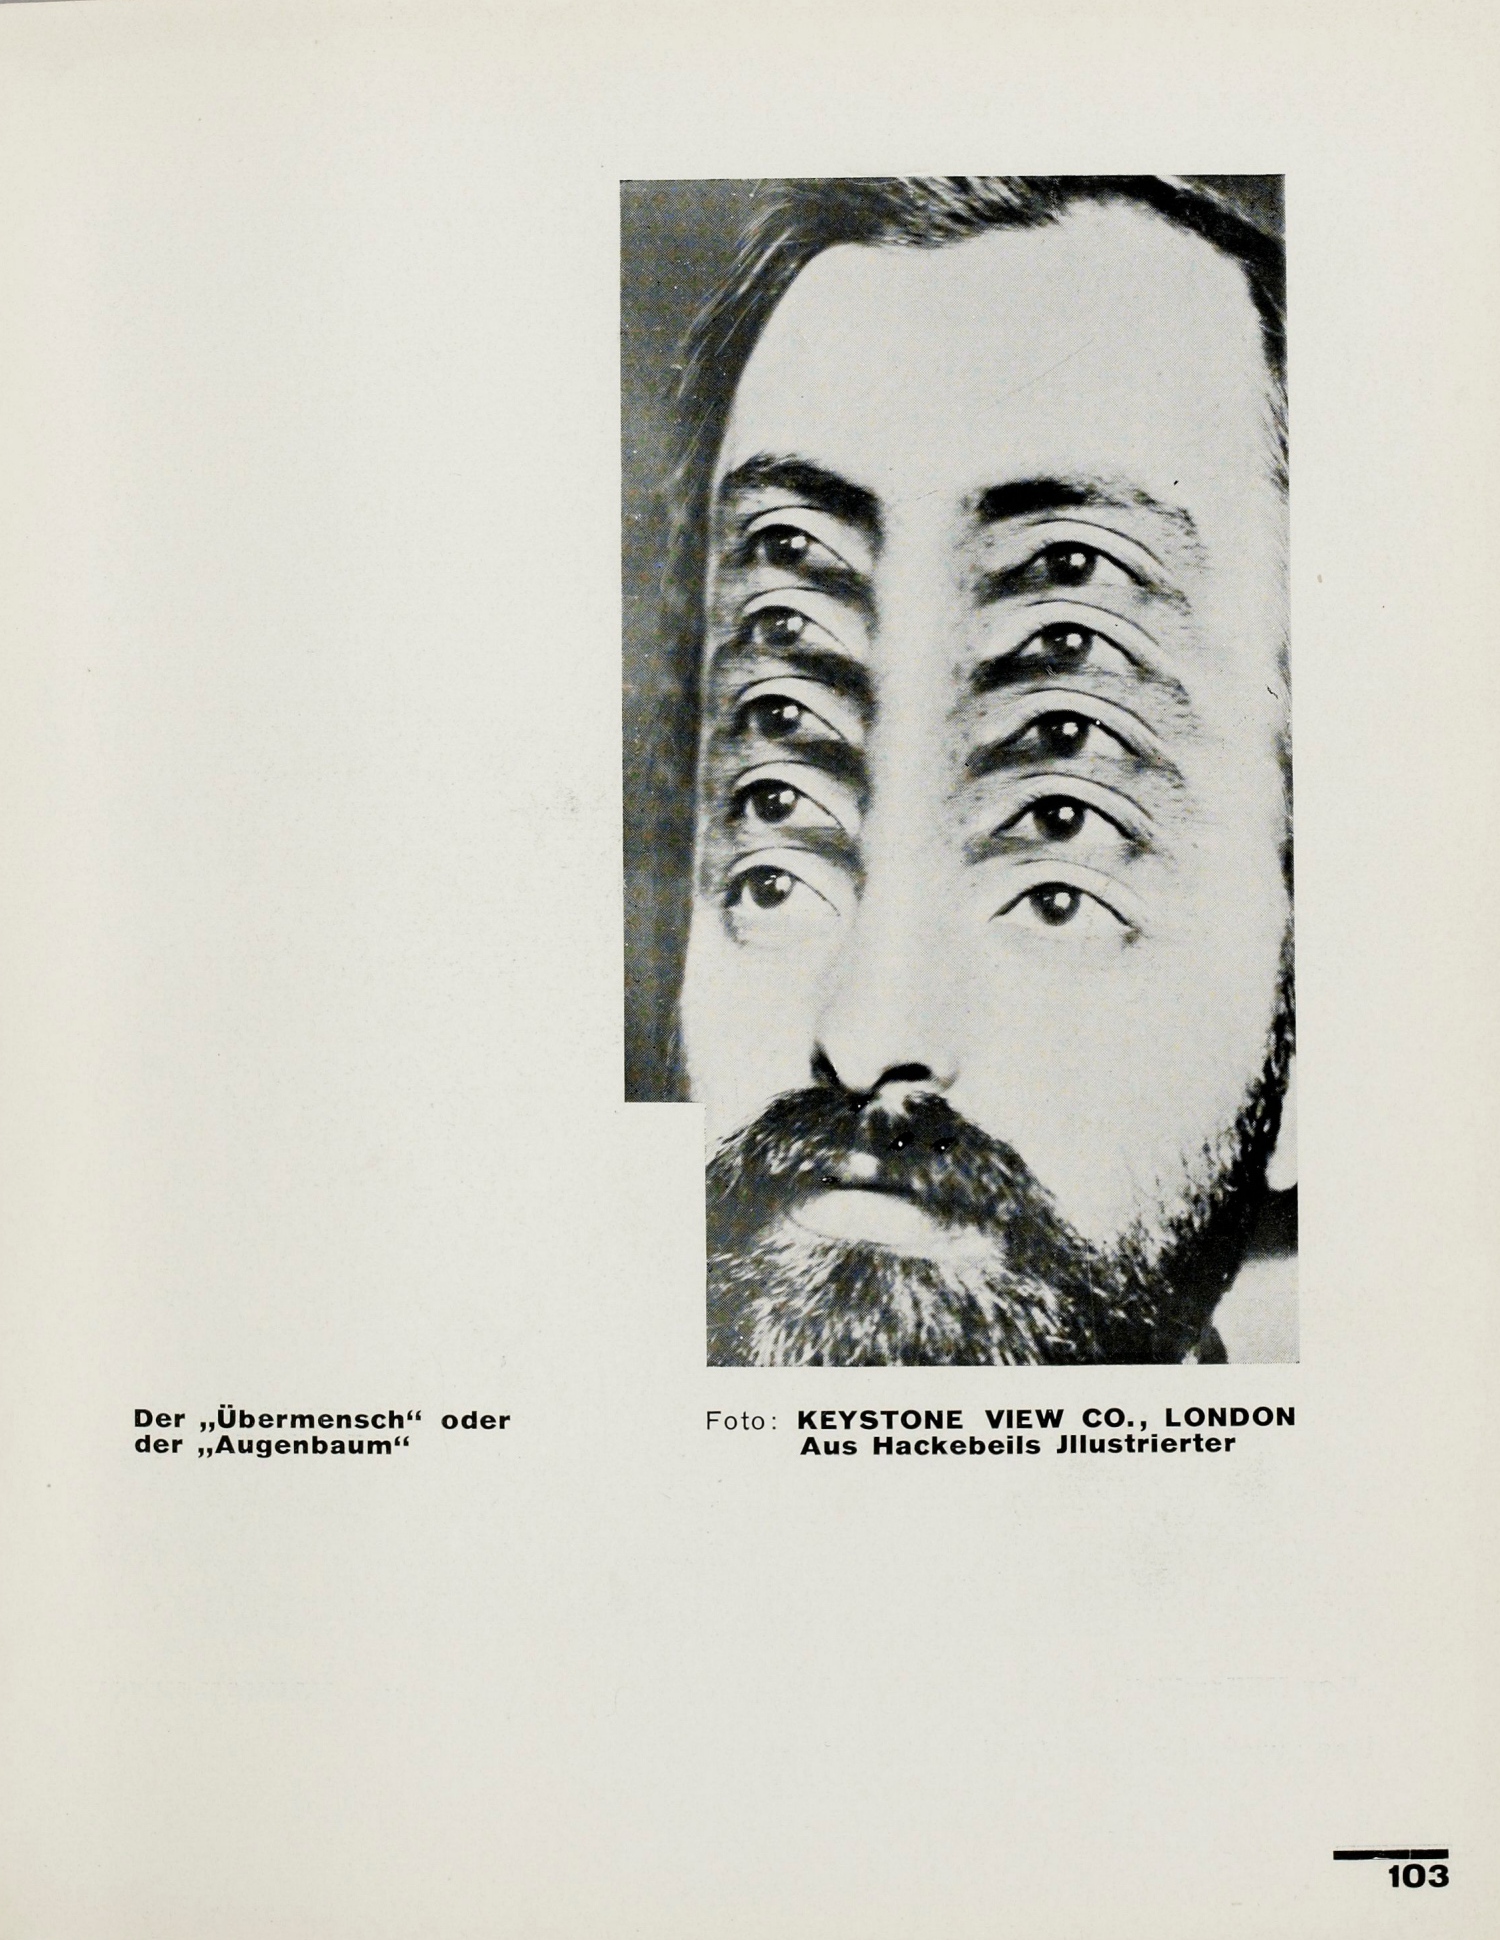 Malerei Fotografie Film / L. Moholy-Nagy. — München : Albert Langen Verlag, 1927. — 140 s., ill. — (Bauhausbücher 8)